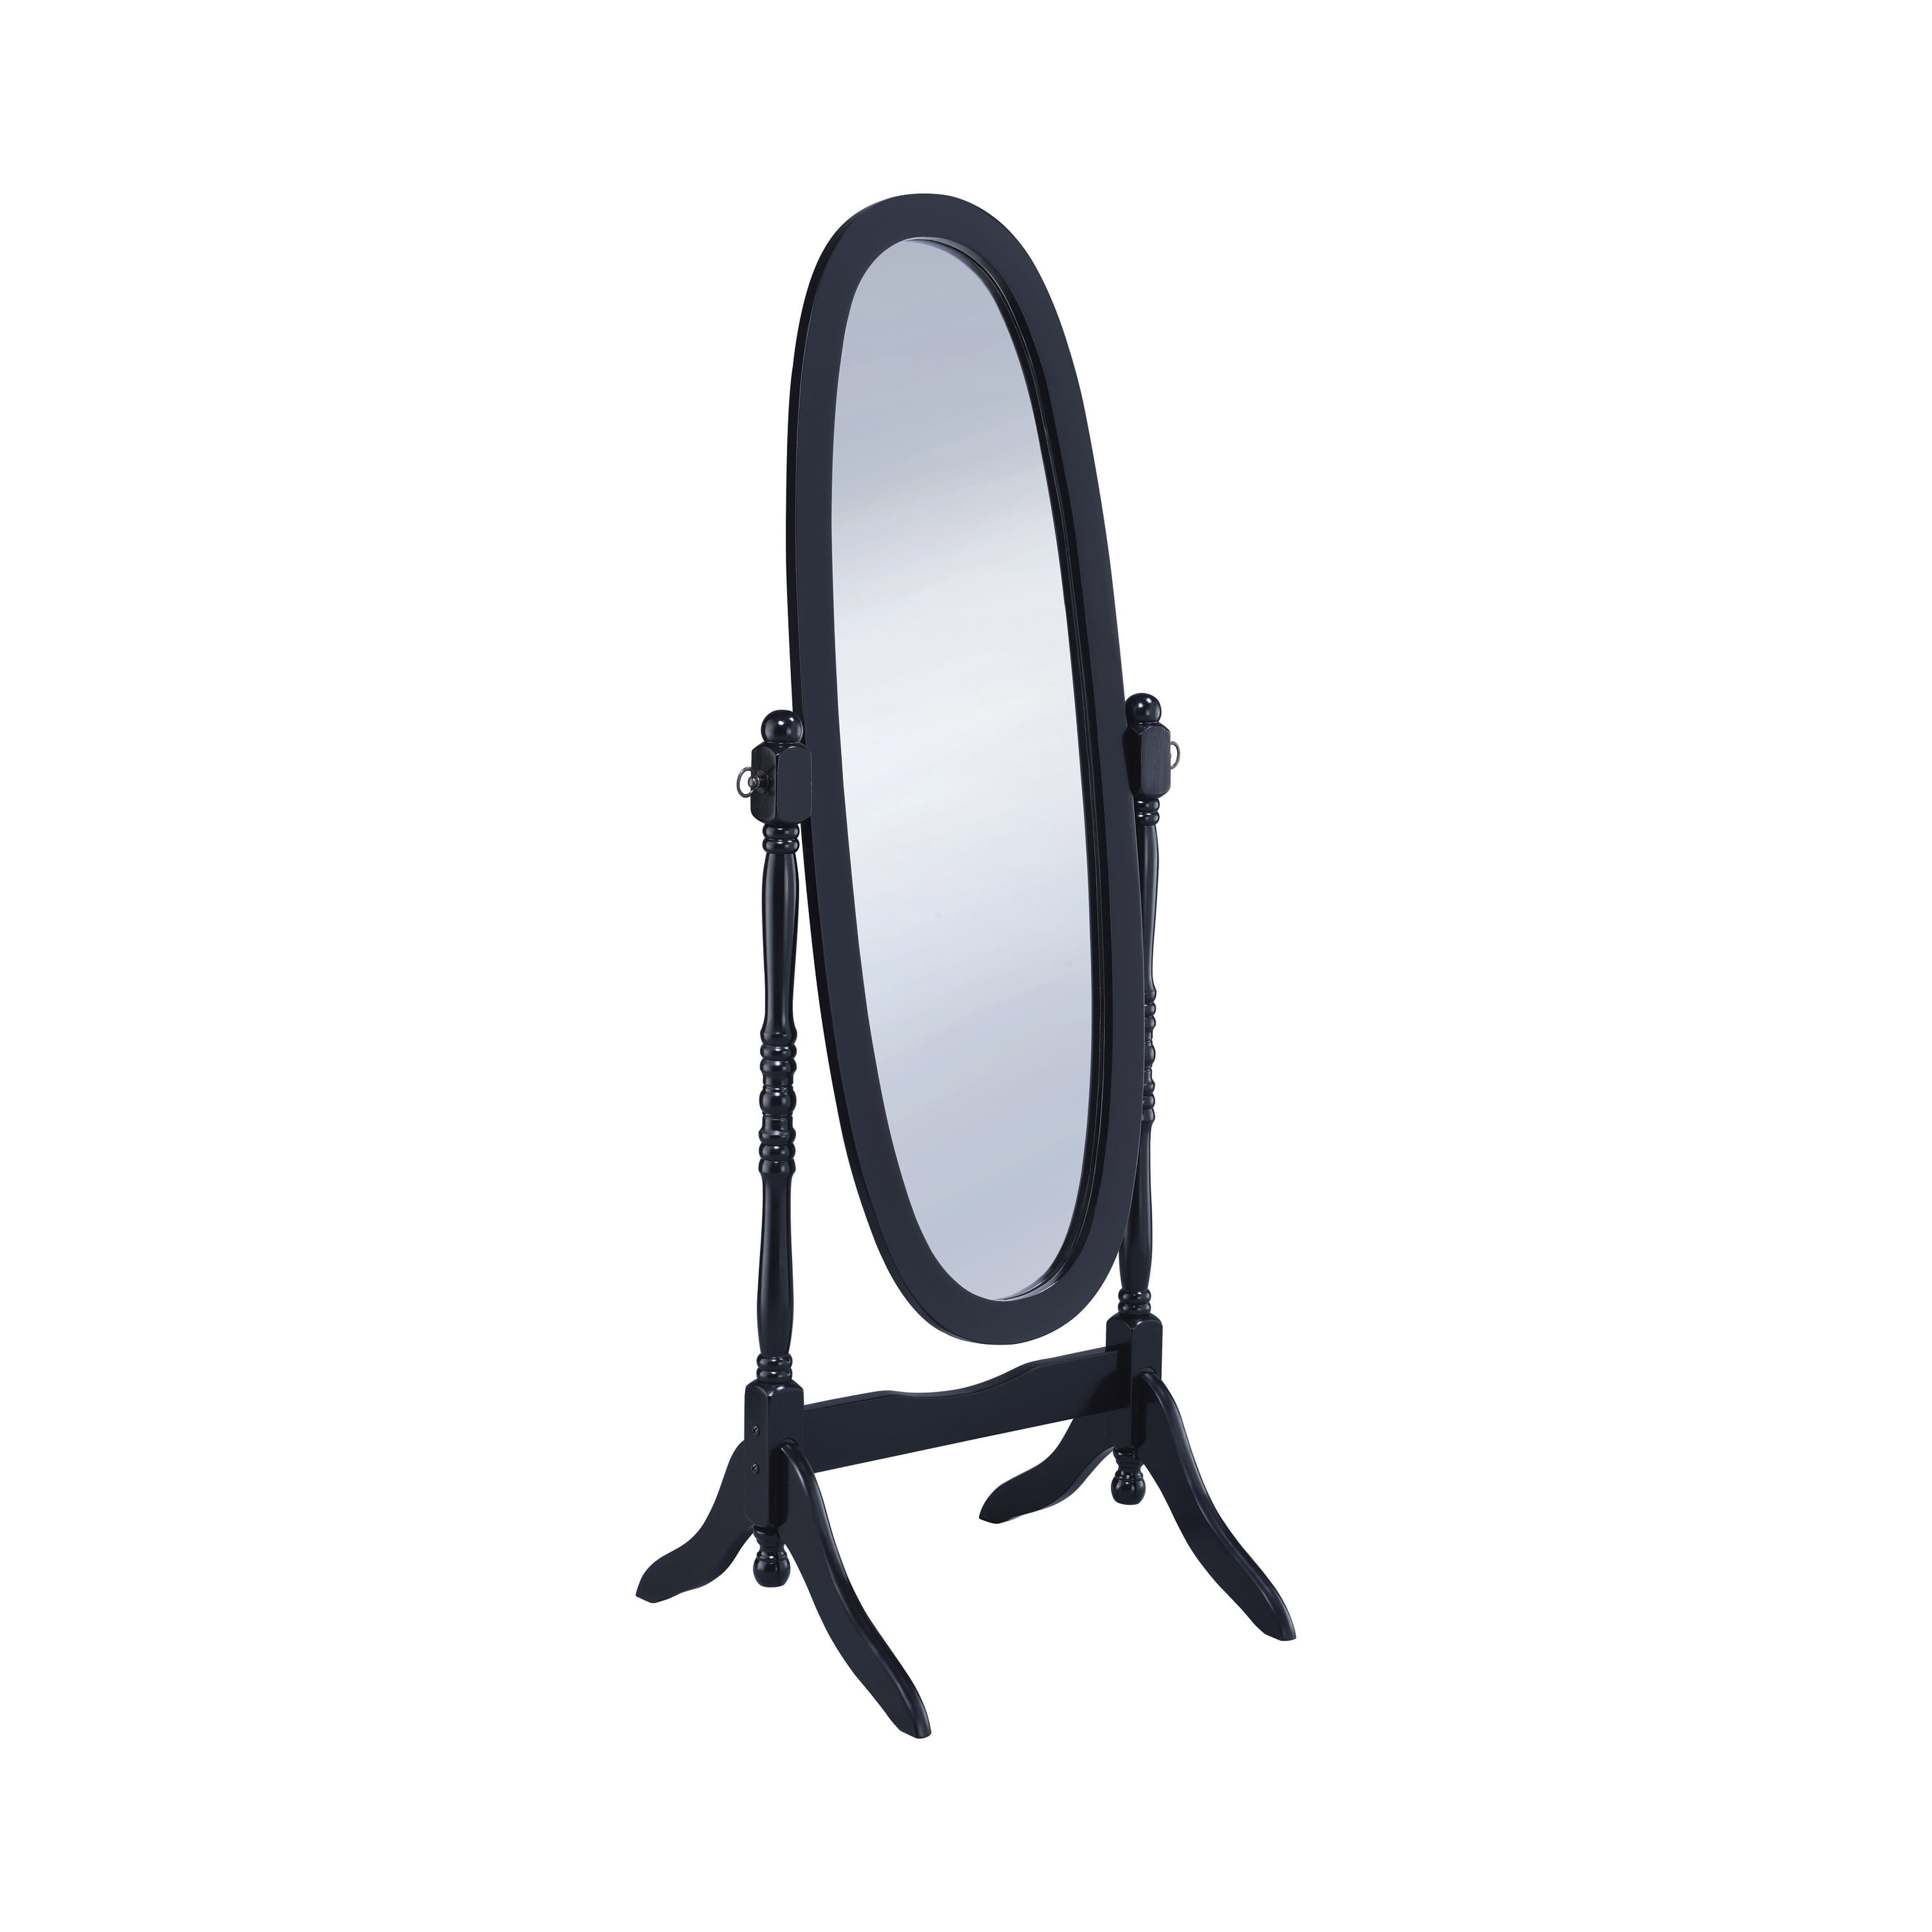 Oval Cheval Mirror Black Com, Black Standing Cheval Mirror